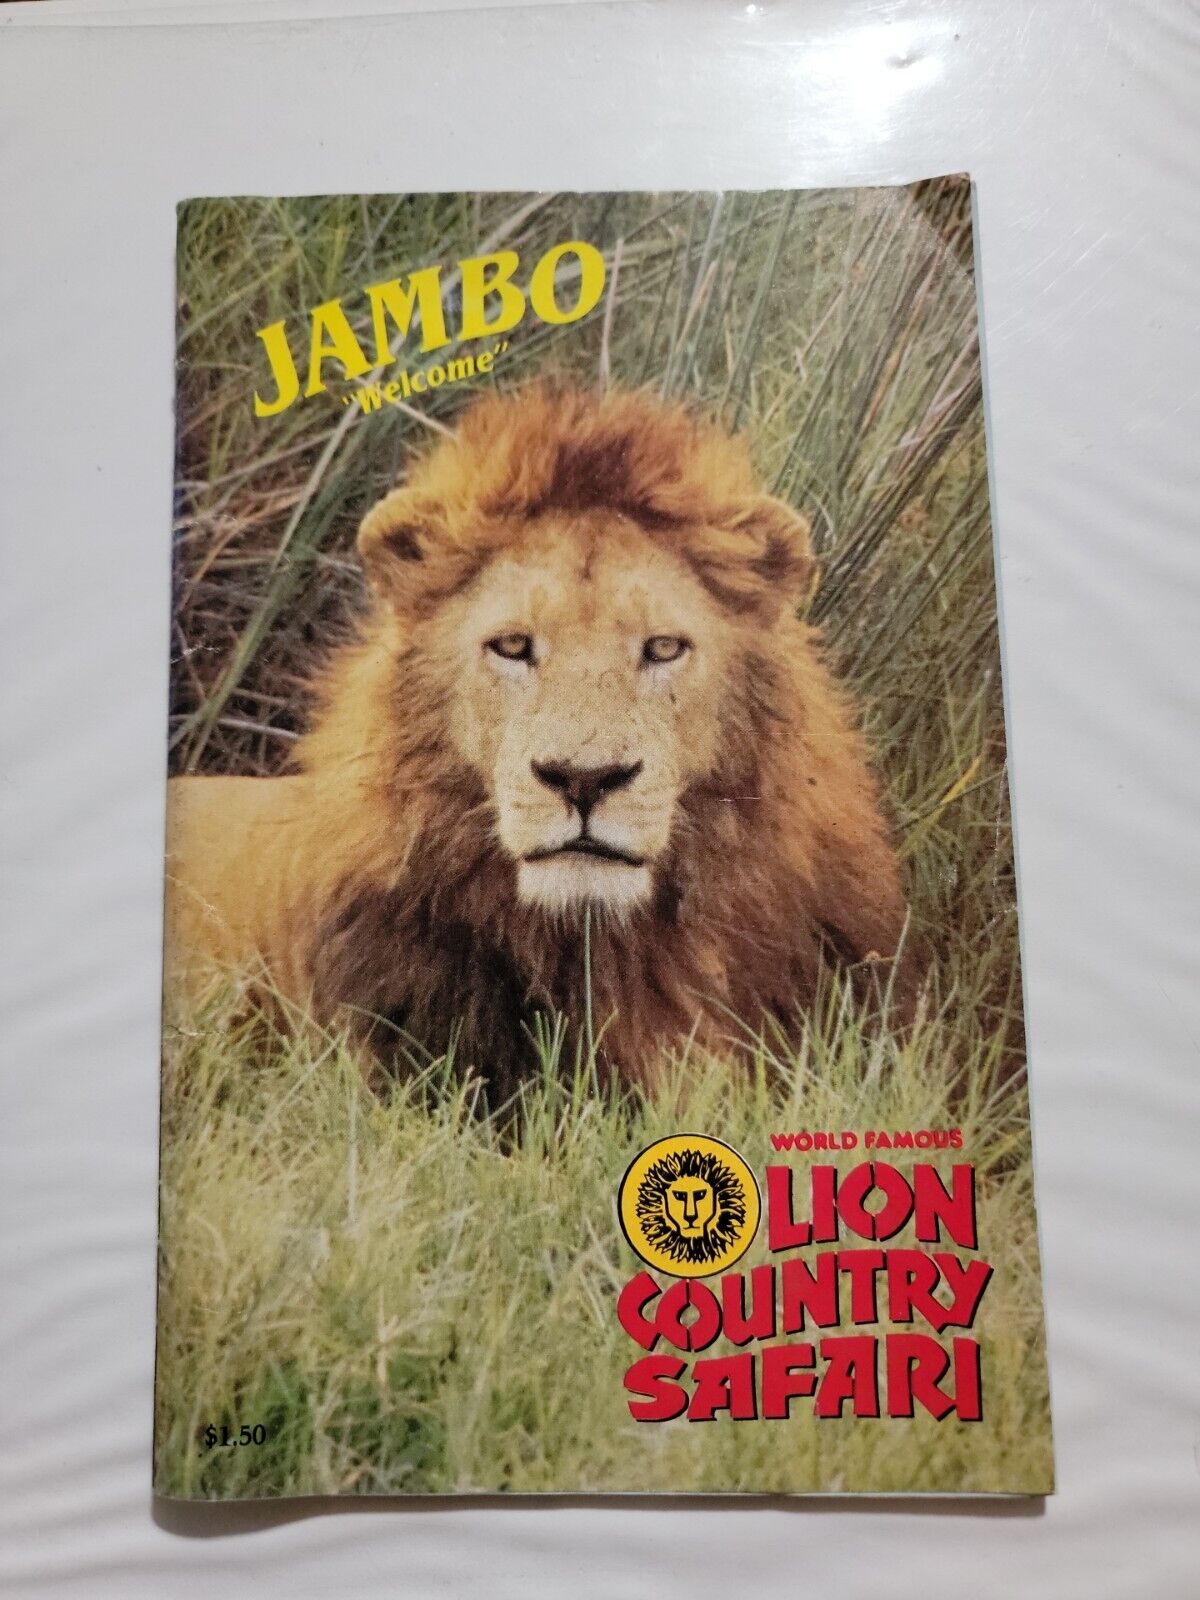 Vintahe West Palm Beach Lion County Safari Florida Souvenir